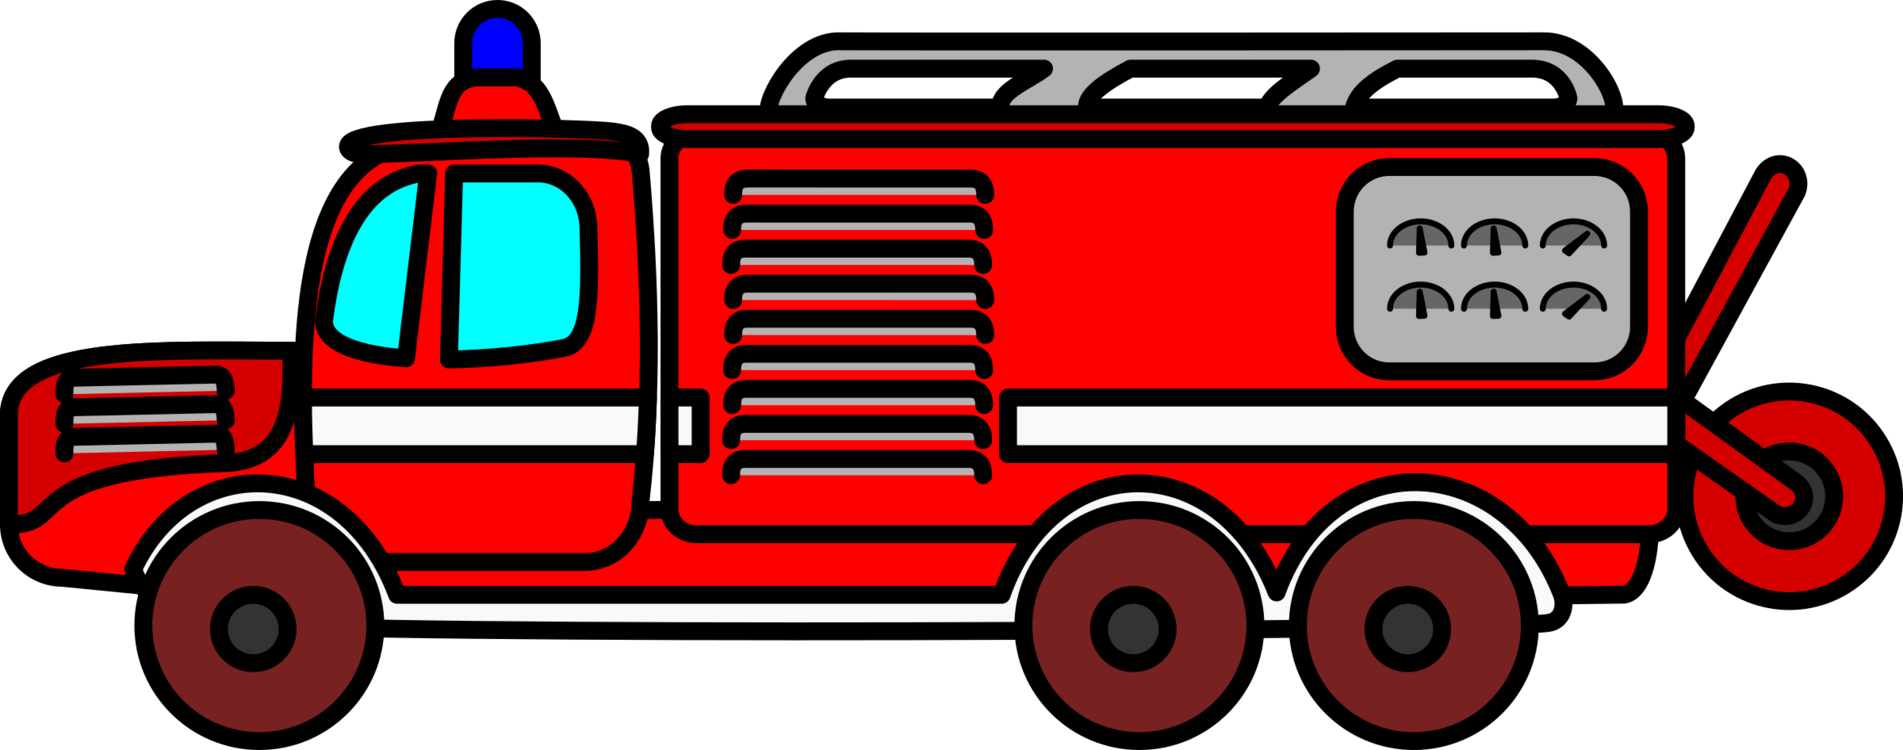 Fire Engine Fire Department Car Motor Vehicle Car